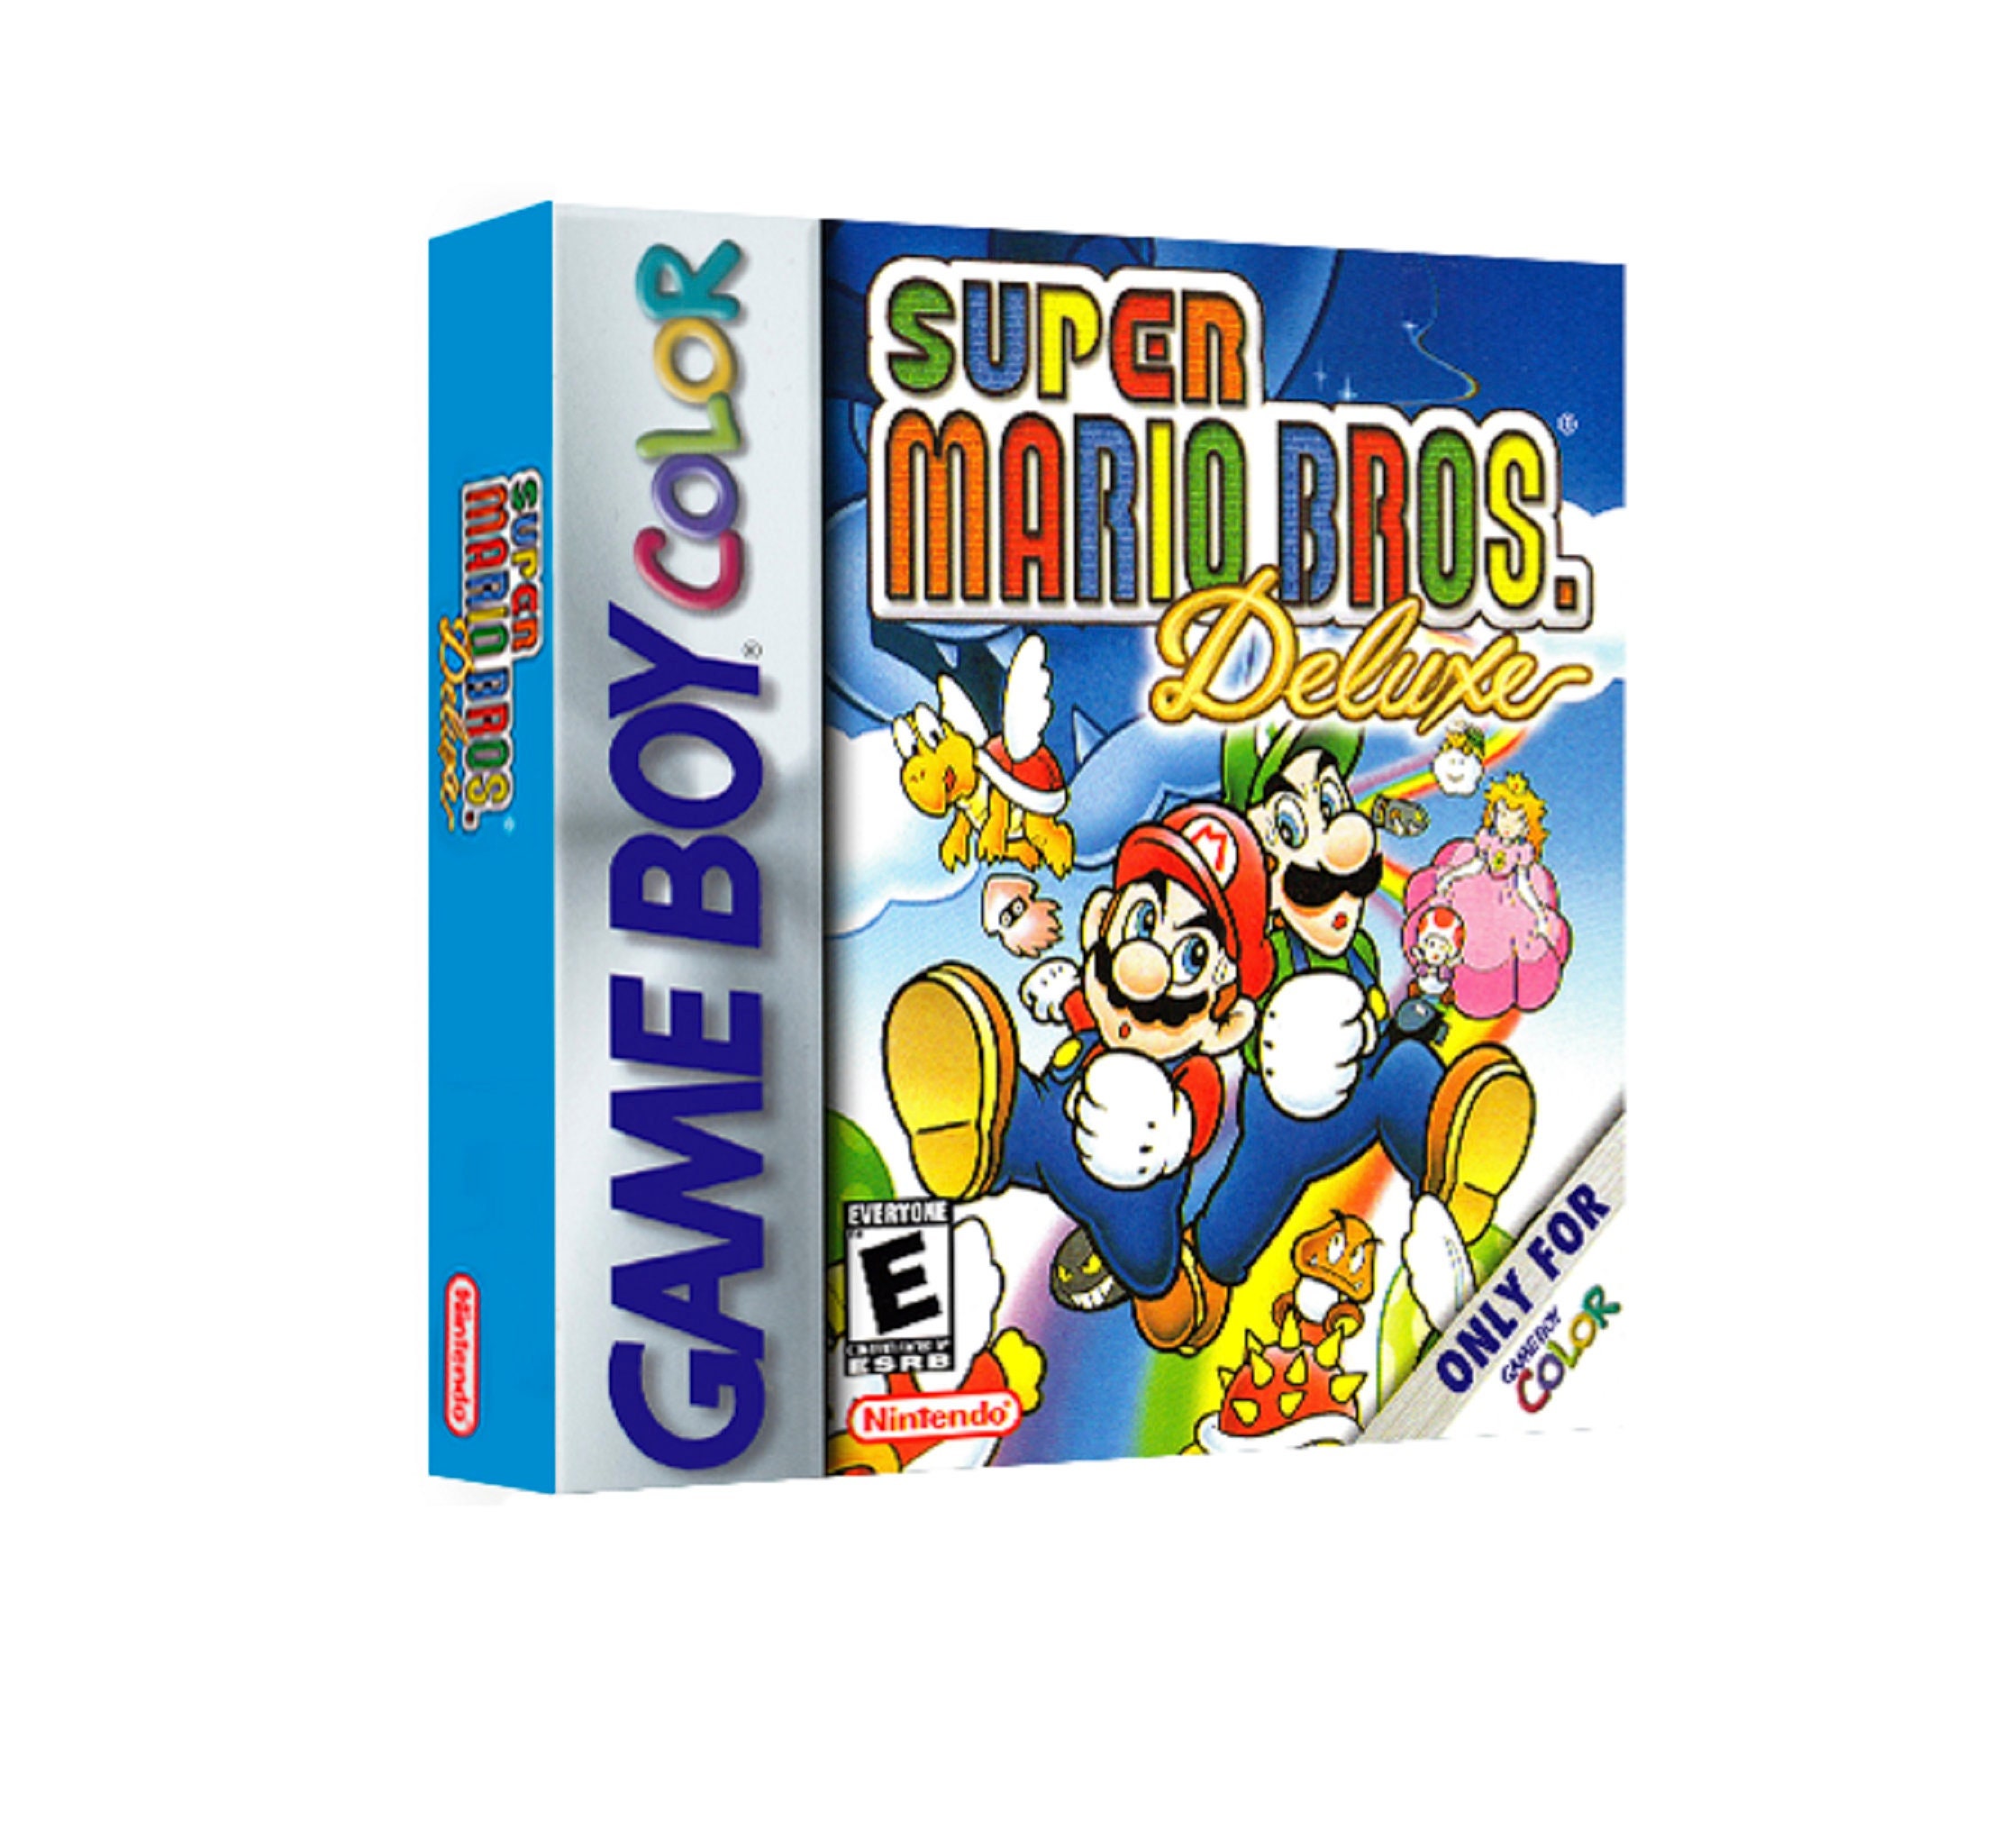 Nintendo Gameboy Color - Game Boy Color w/ 12 Games - Sans boîte d